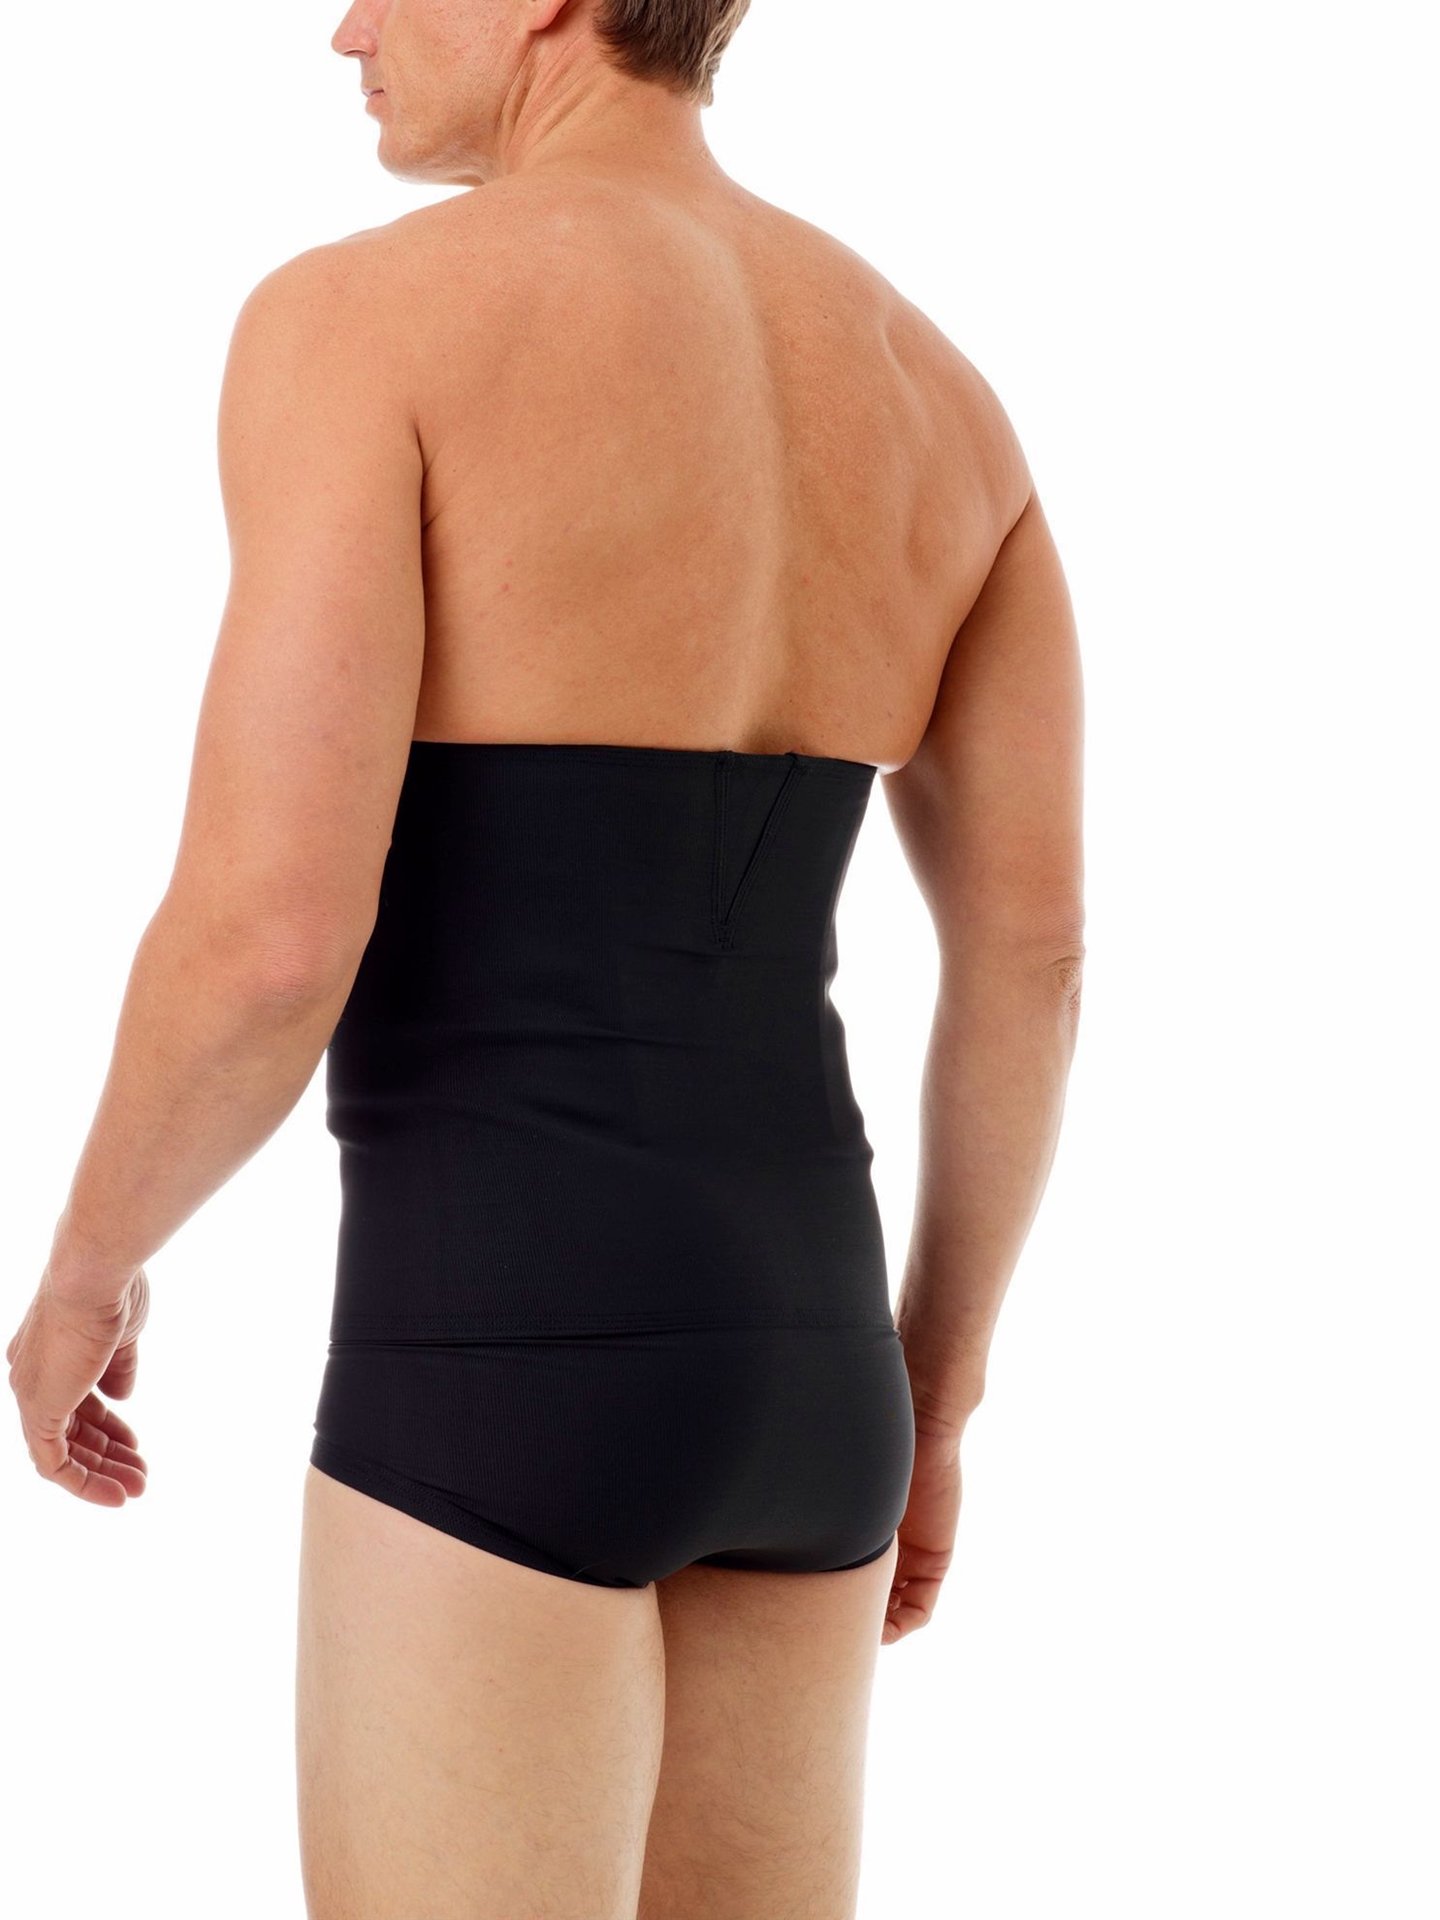 https://www.underworks.com/images/thumbs/0000564_12-inch-belly-buster-zip-n-trim-mens-compression-underwear.jpeg